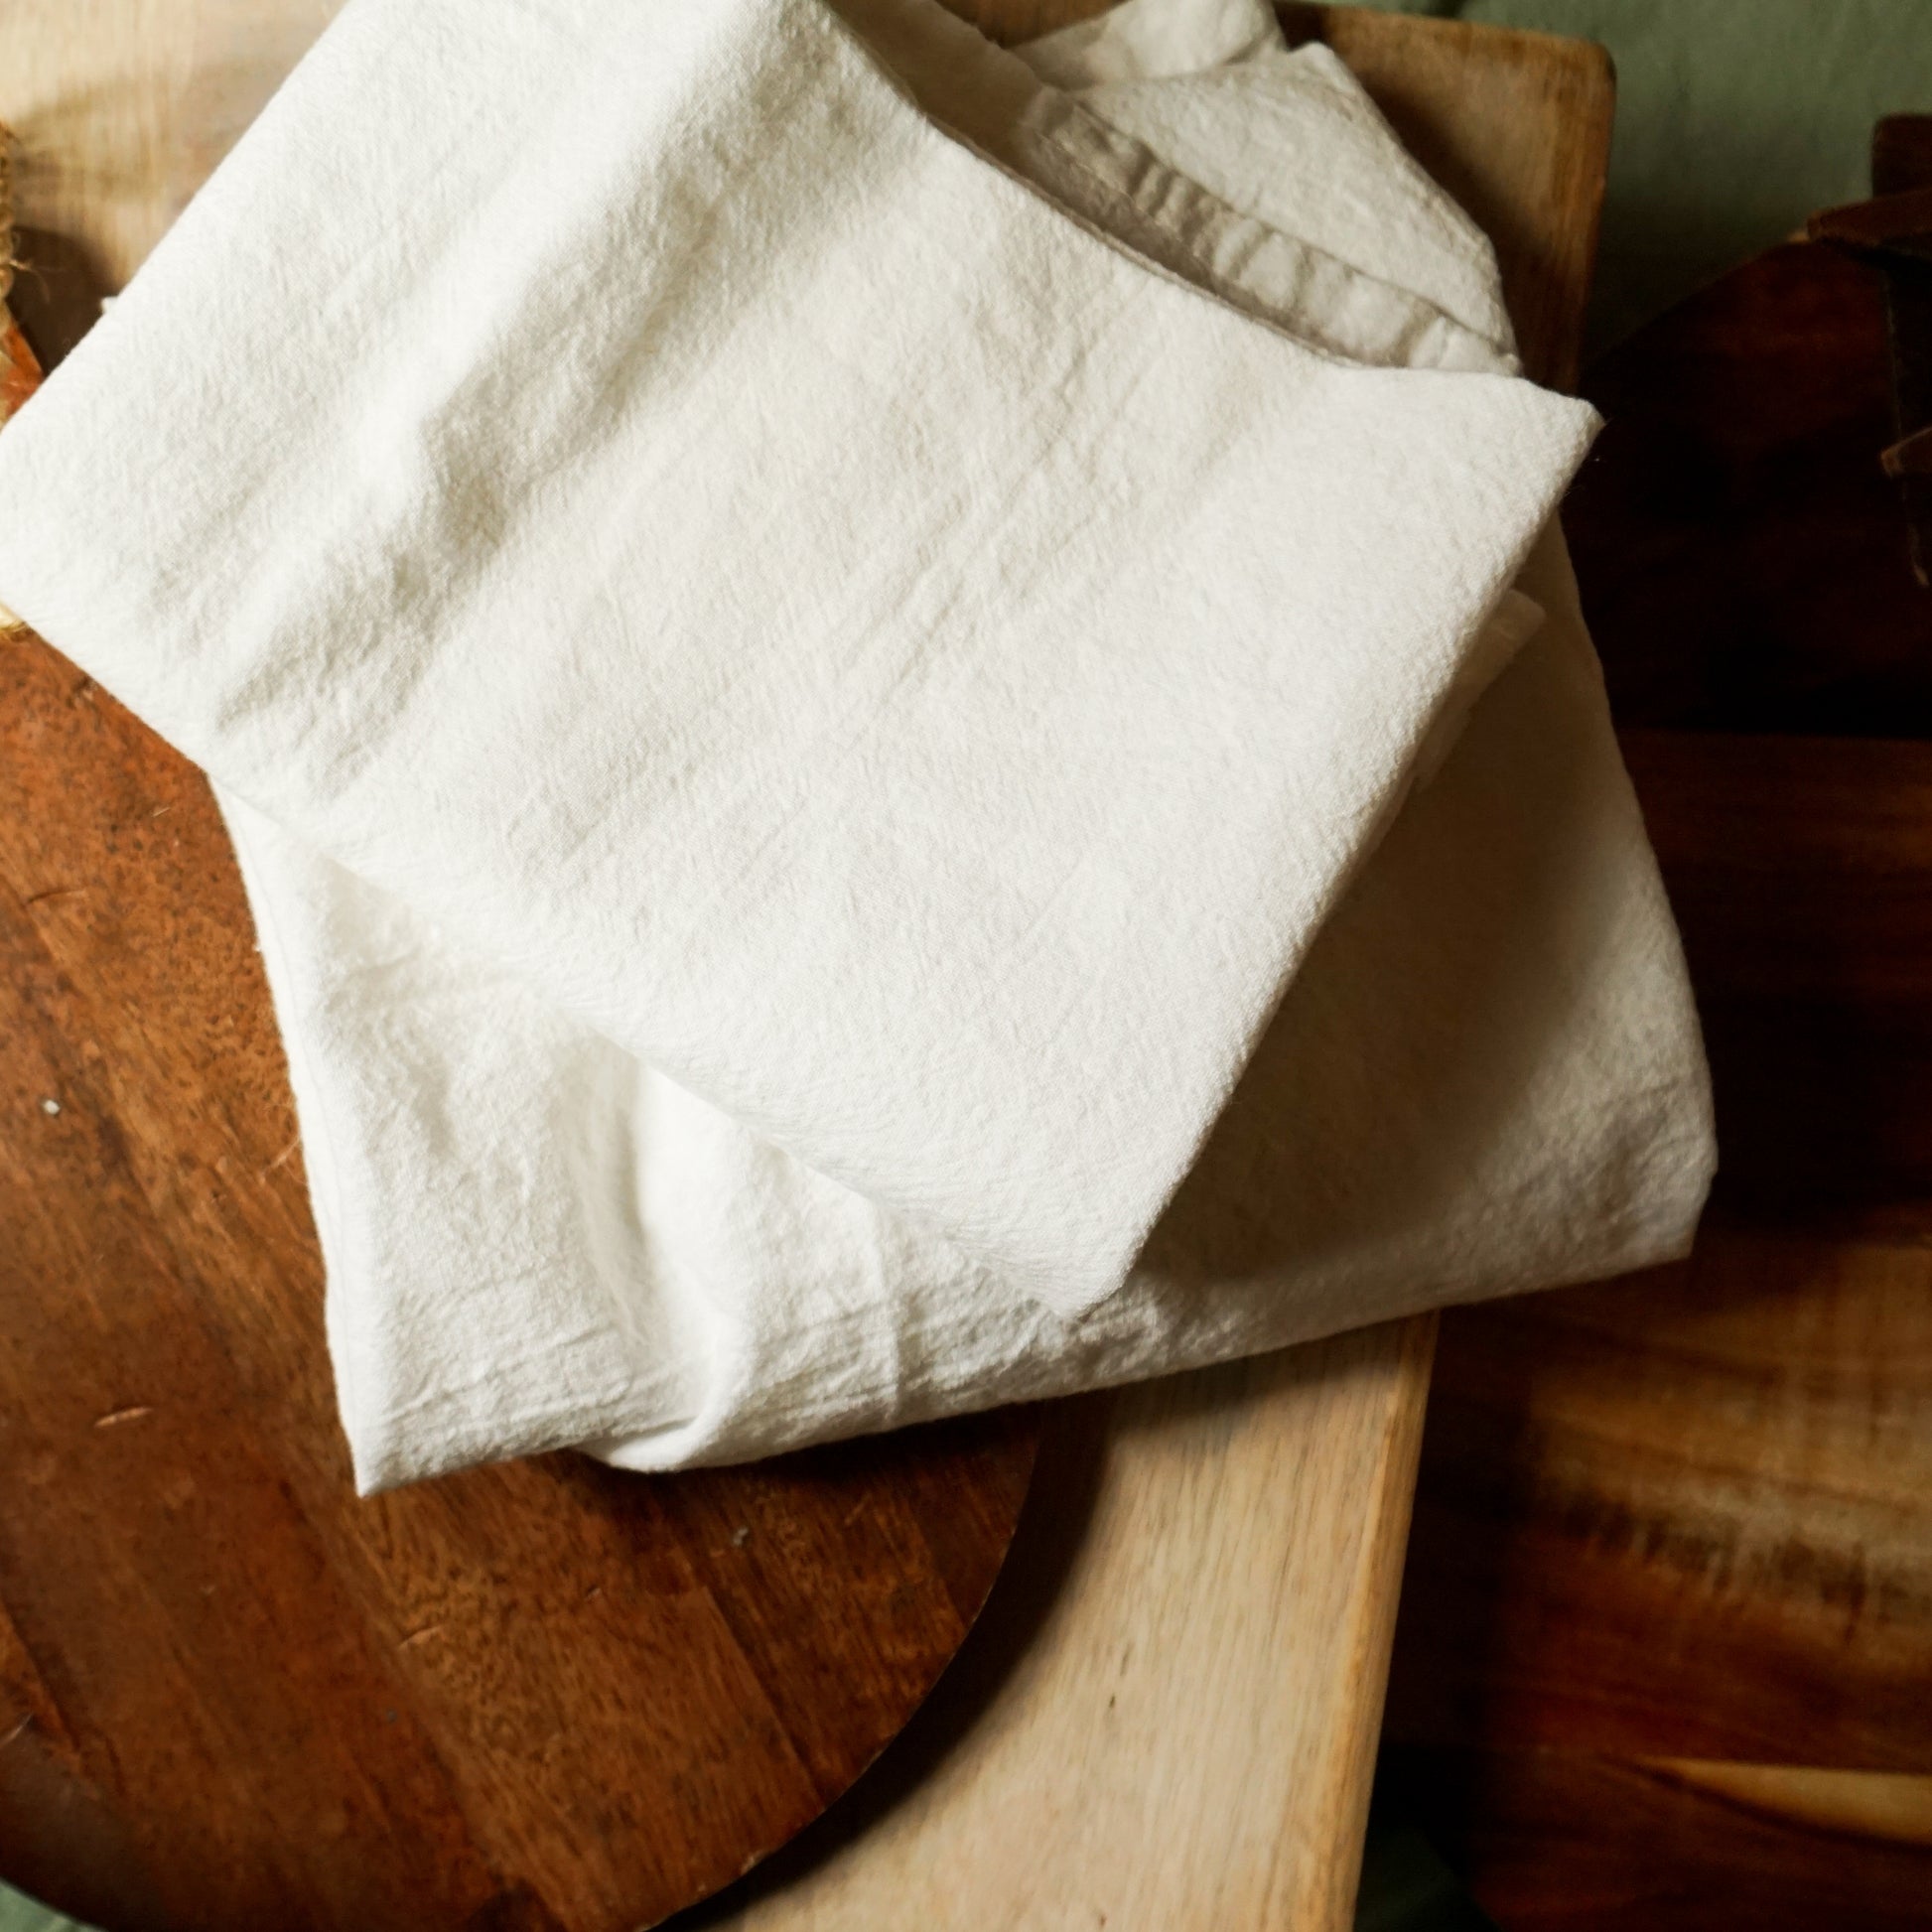 Grain Sack Red Stripes Kitchen Washcloth Grain Sack Hand Towel